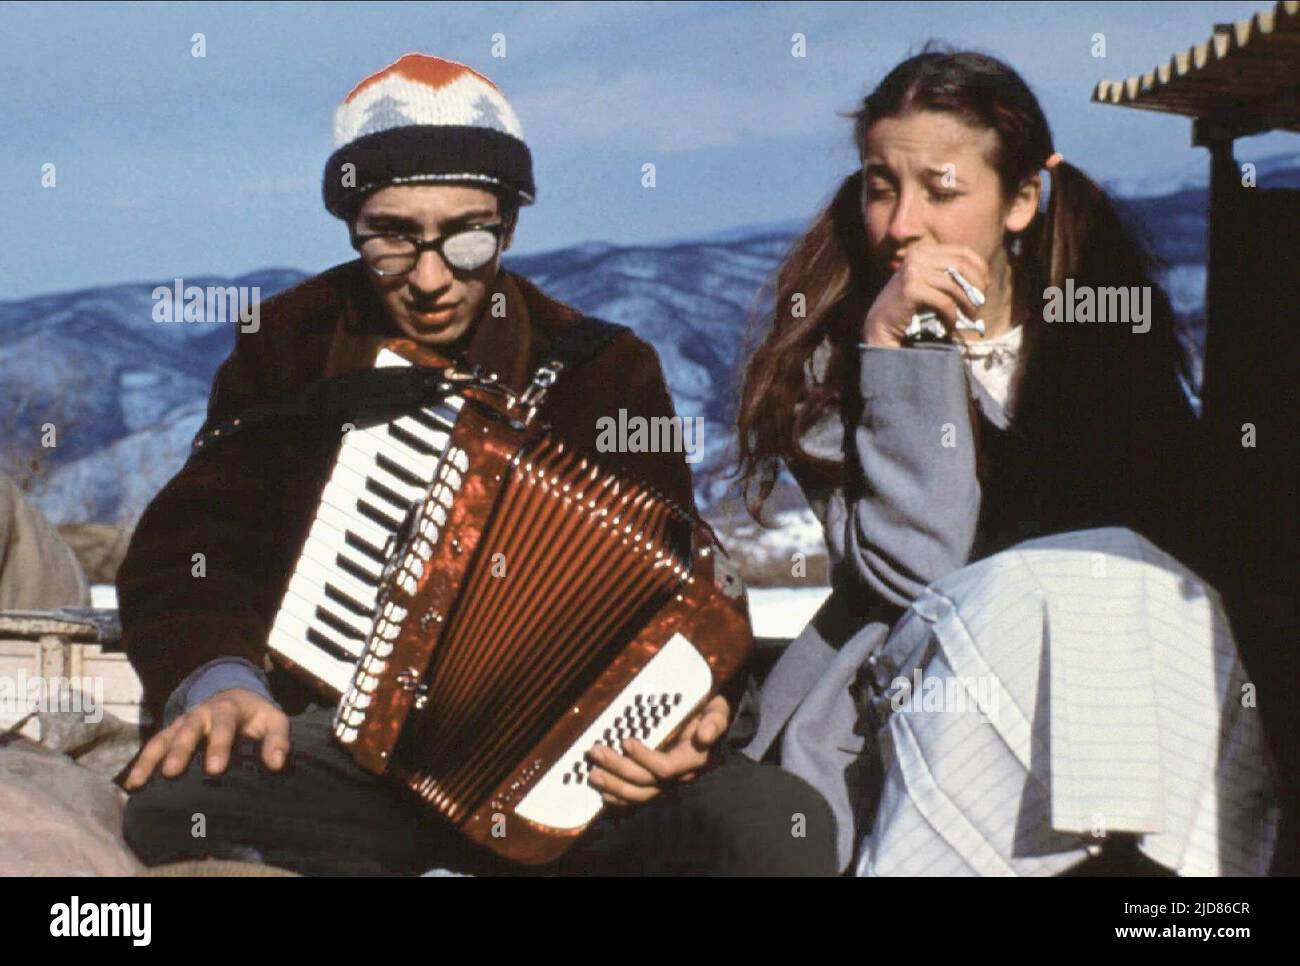 DUJMOVIC,TRPKOVA, TIME OF THE GYPSIES, 1988, Stock Photo